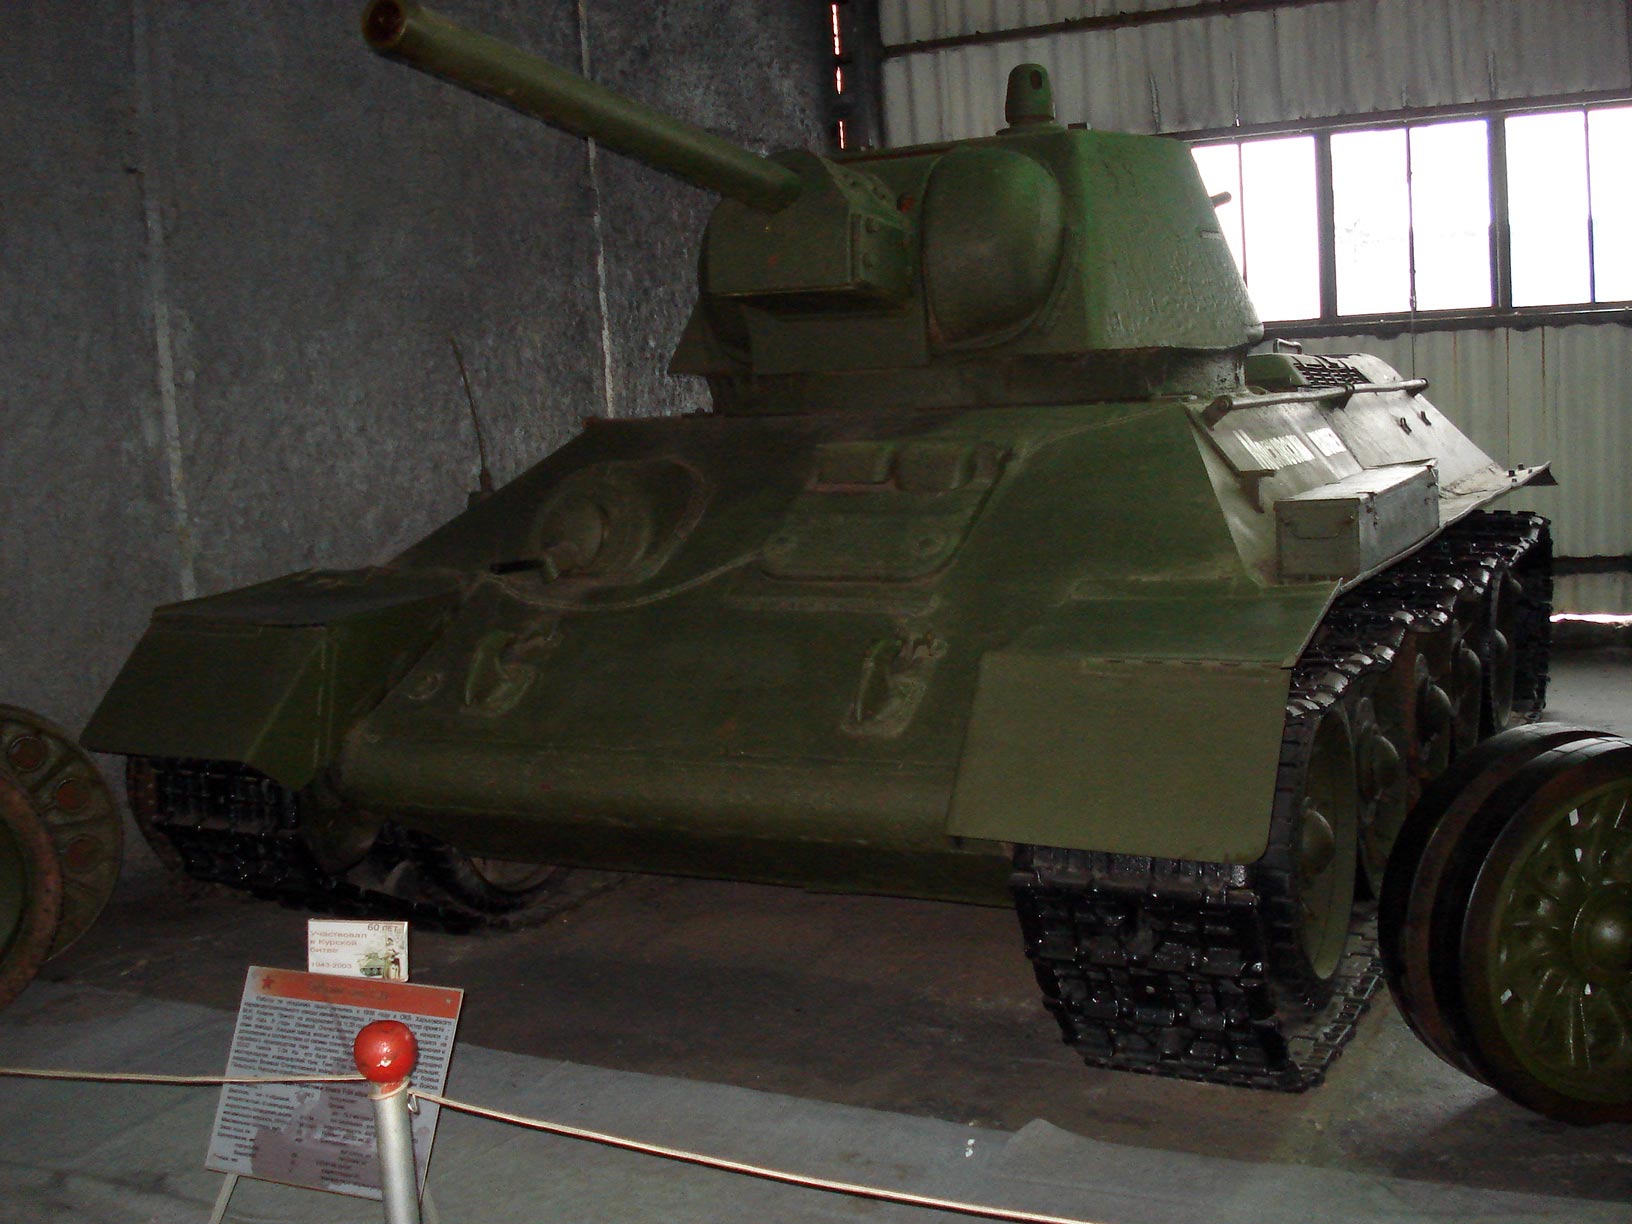 Soviet medium tank T-34 "Moscow Pioneer", Kubinka tank museum